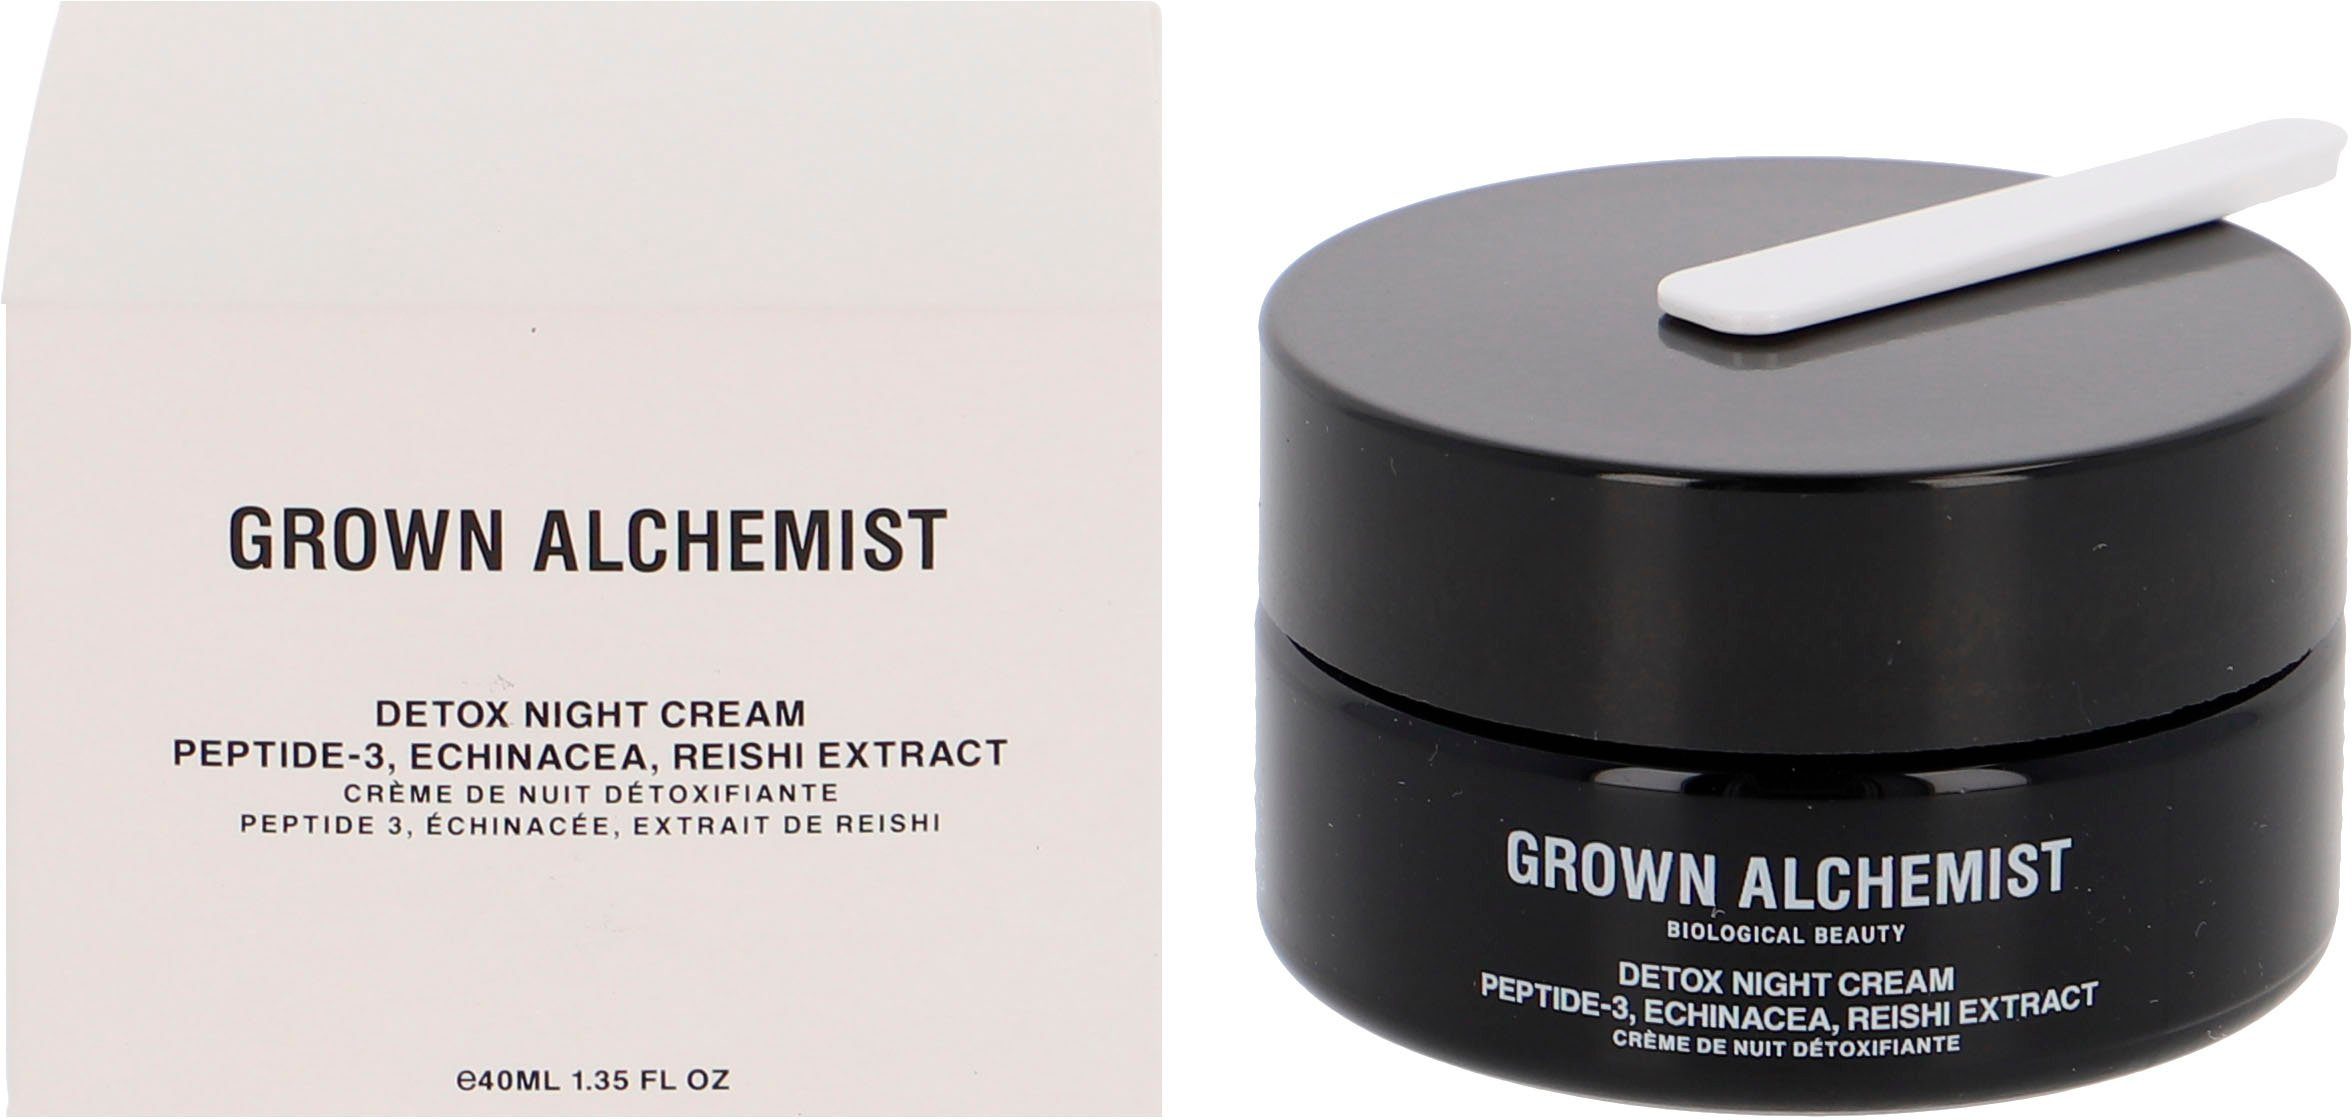 GROWN ALCHEMIST Nachtcreme Detox Cream, Peptide-3, Extract Reishi Night Echinacea